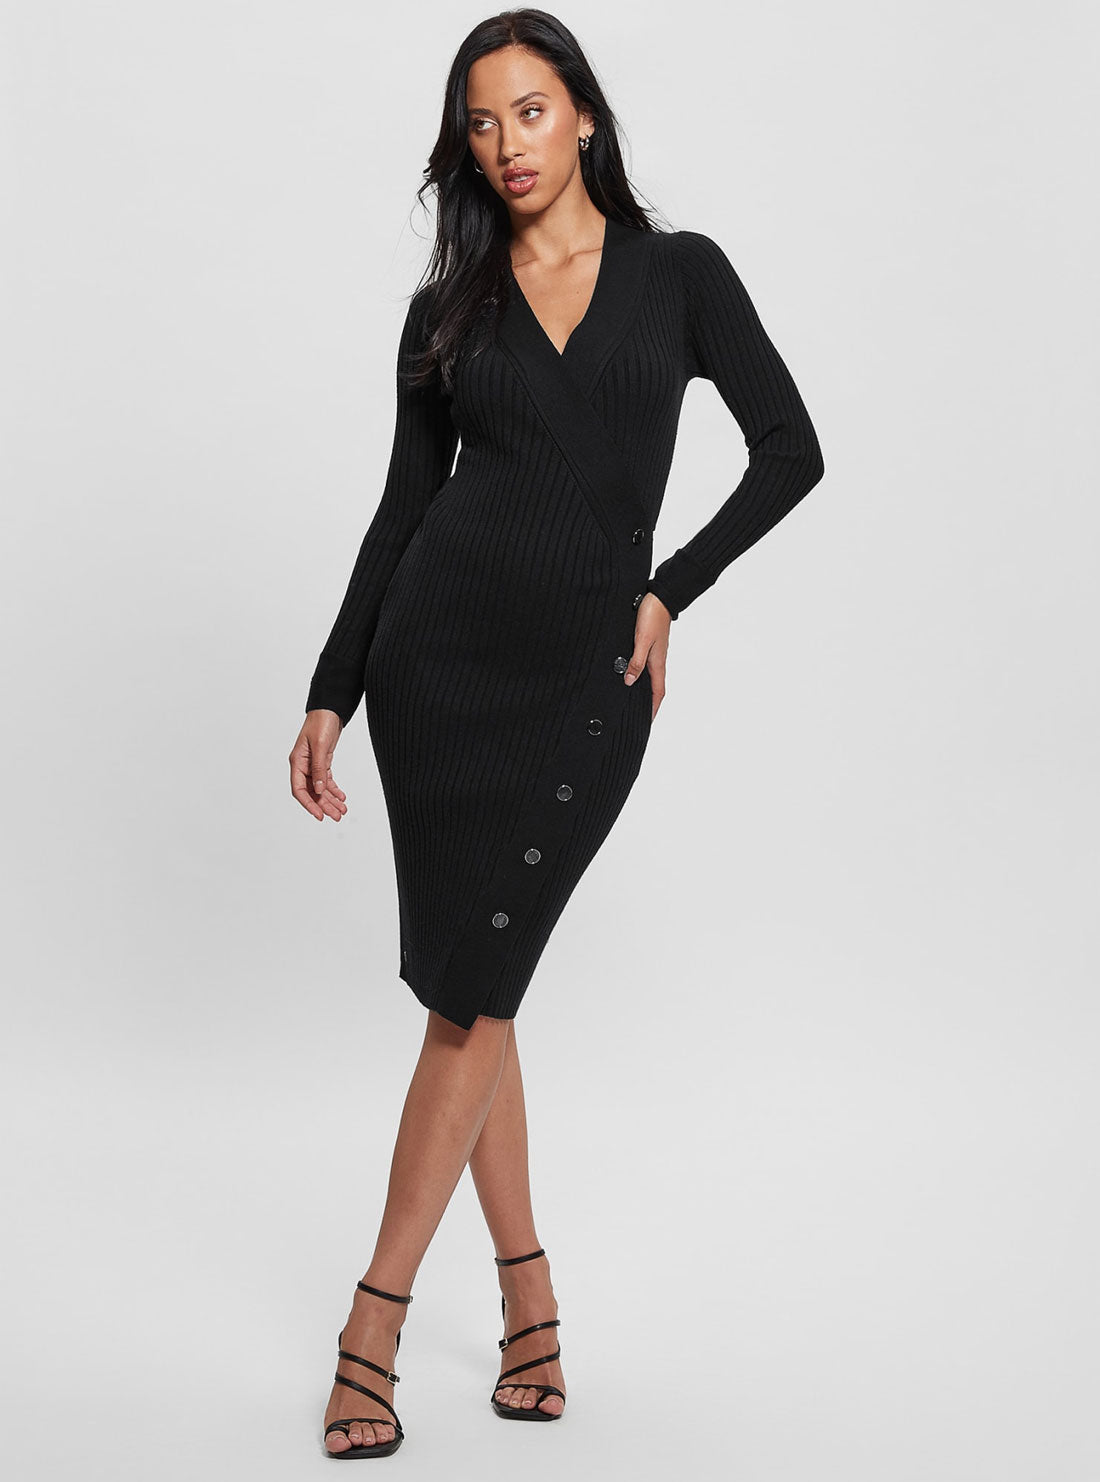 Black Cecile Midi Knit Dress | GUESS Women's Apparel | full view